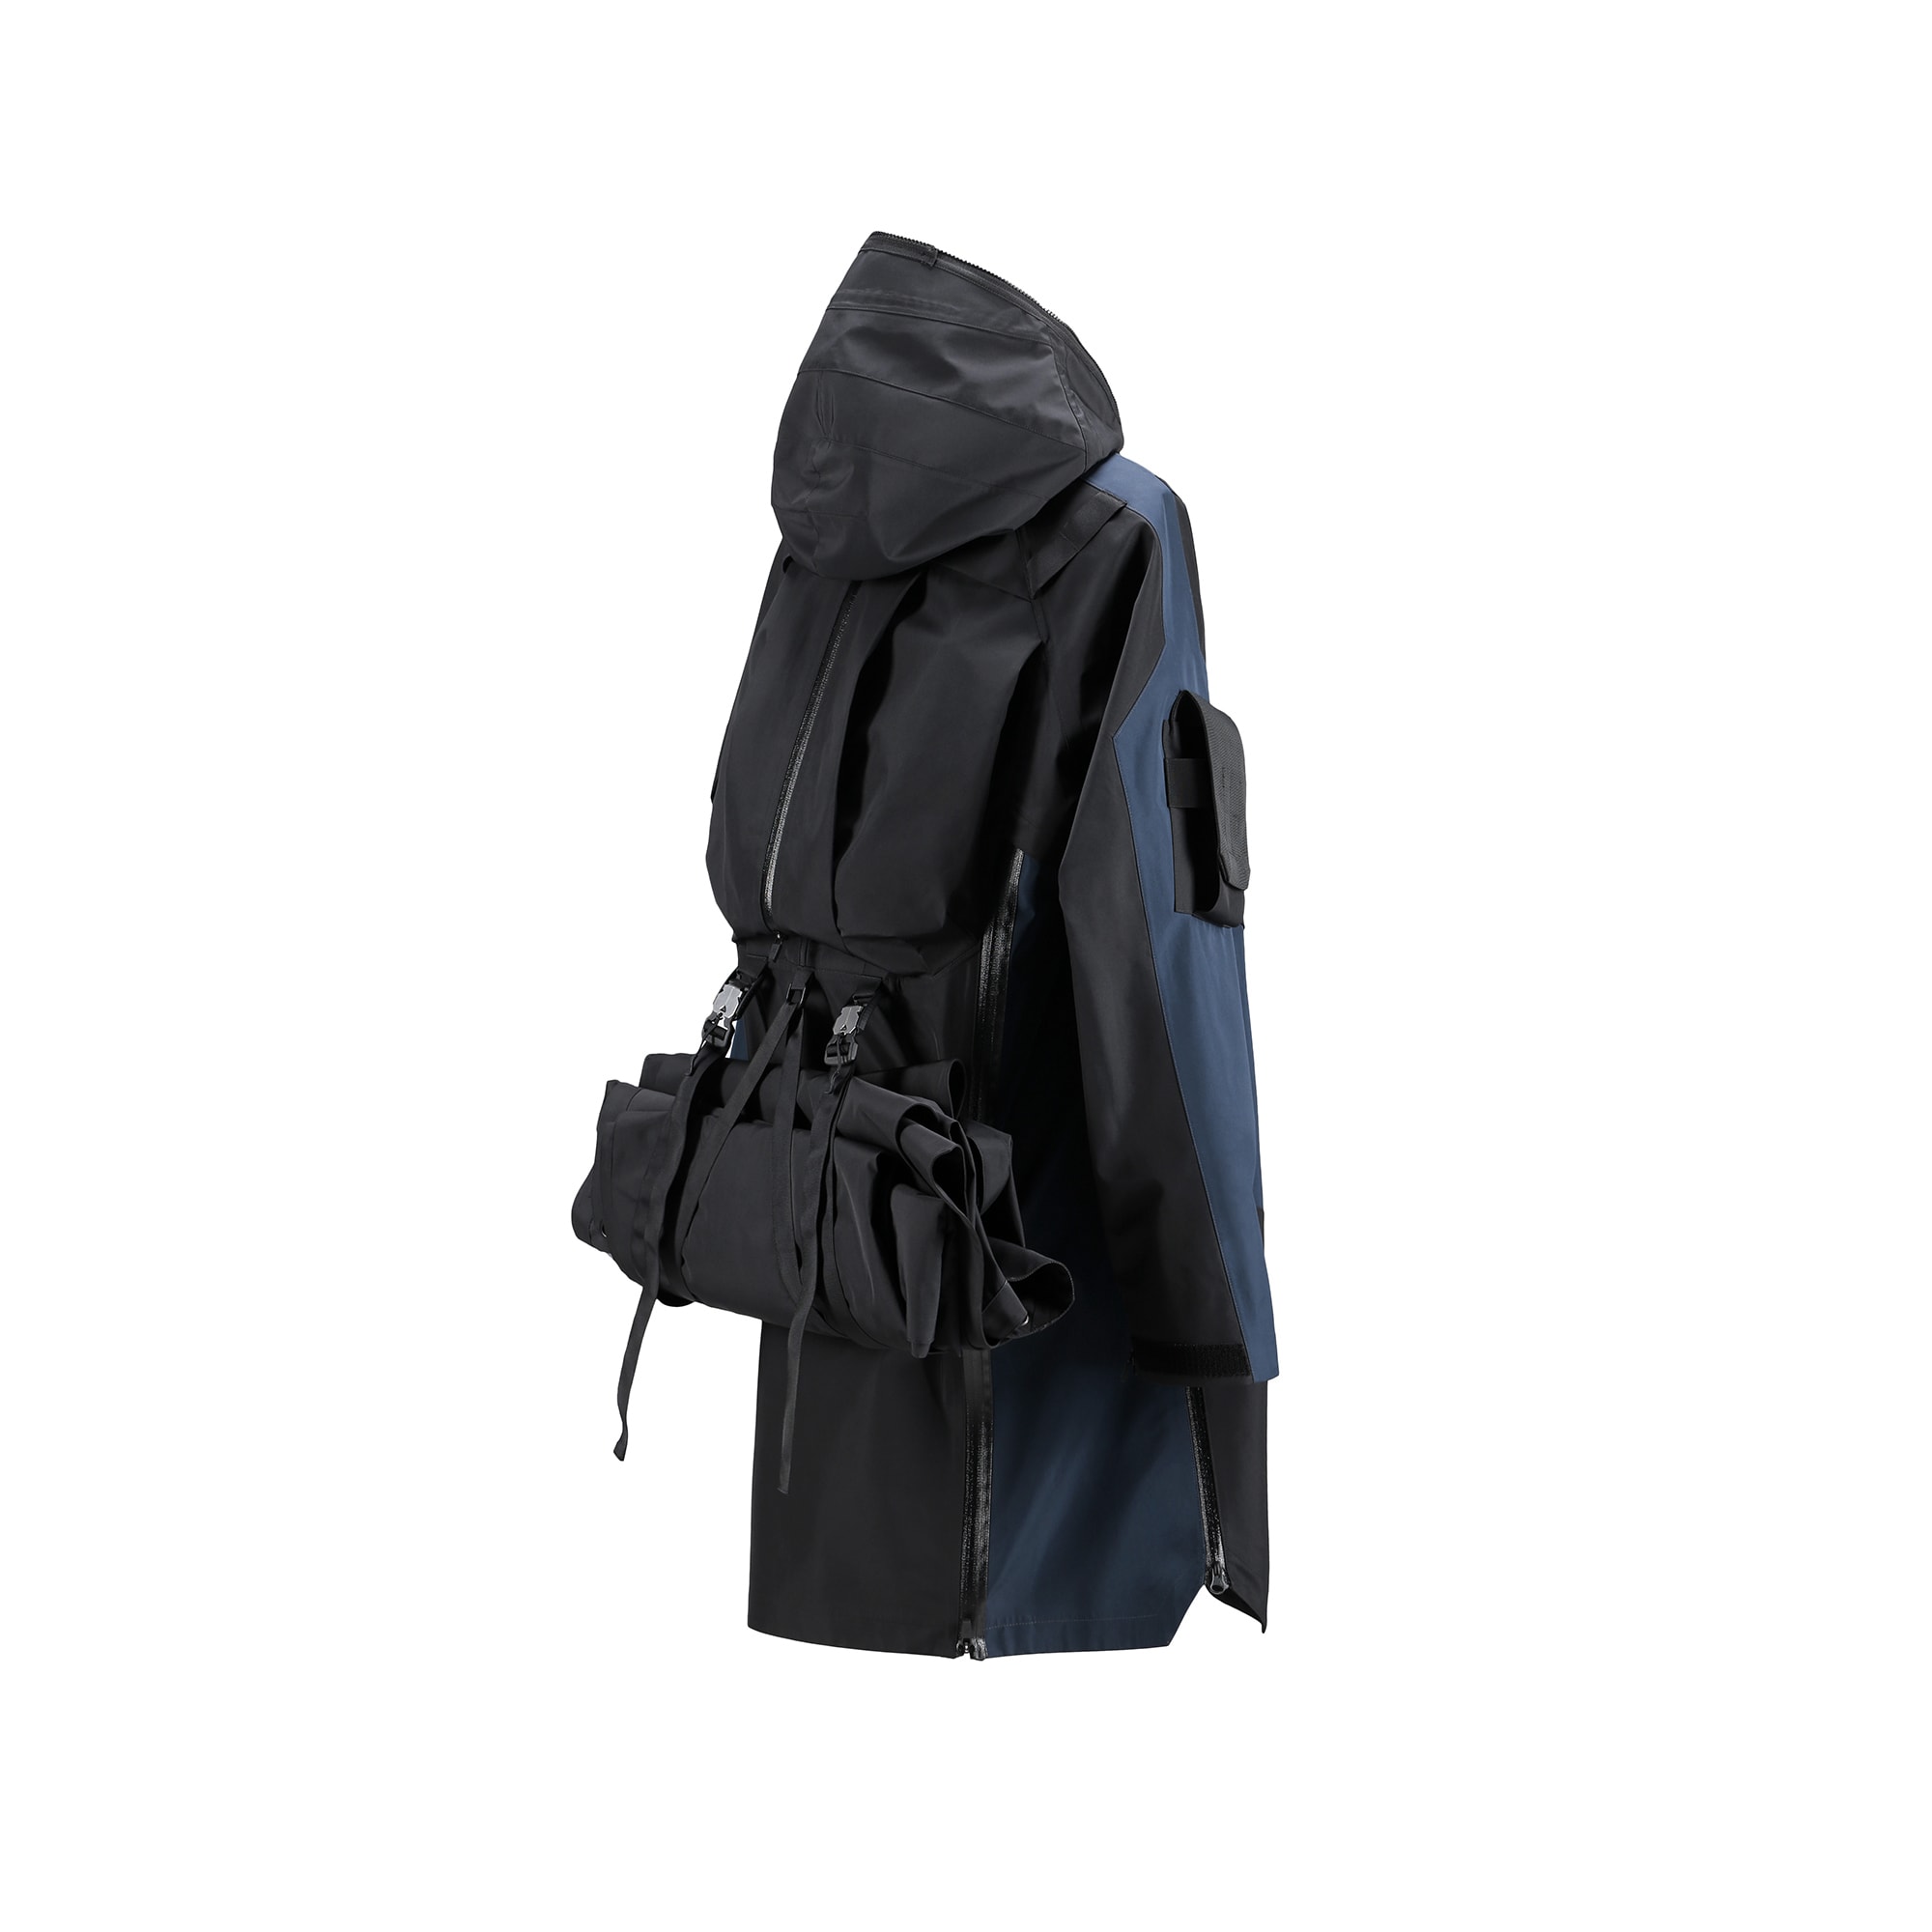 REINDEE LUSION 推出 2 合 1 帐篷背包式户外概念冲锋衣